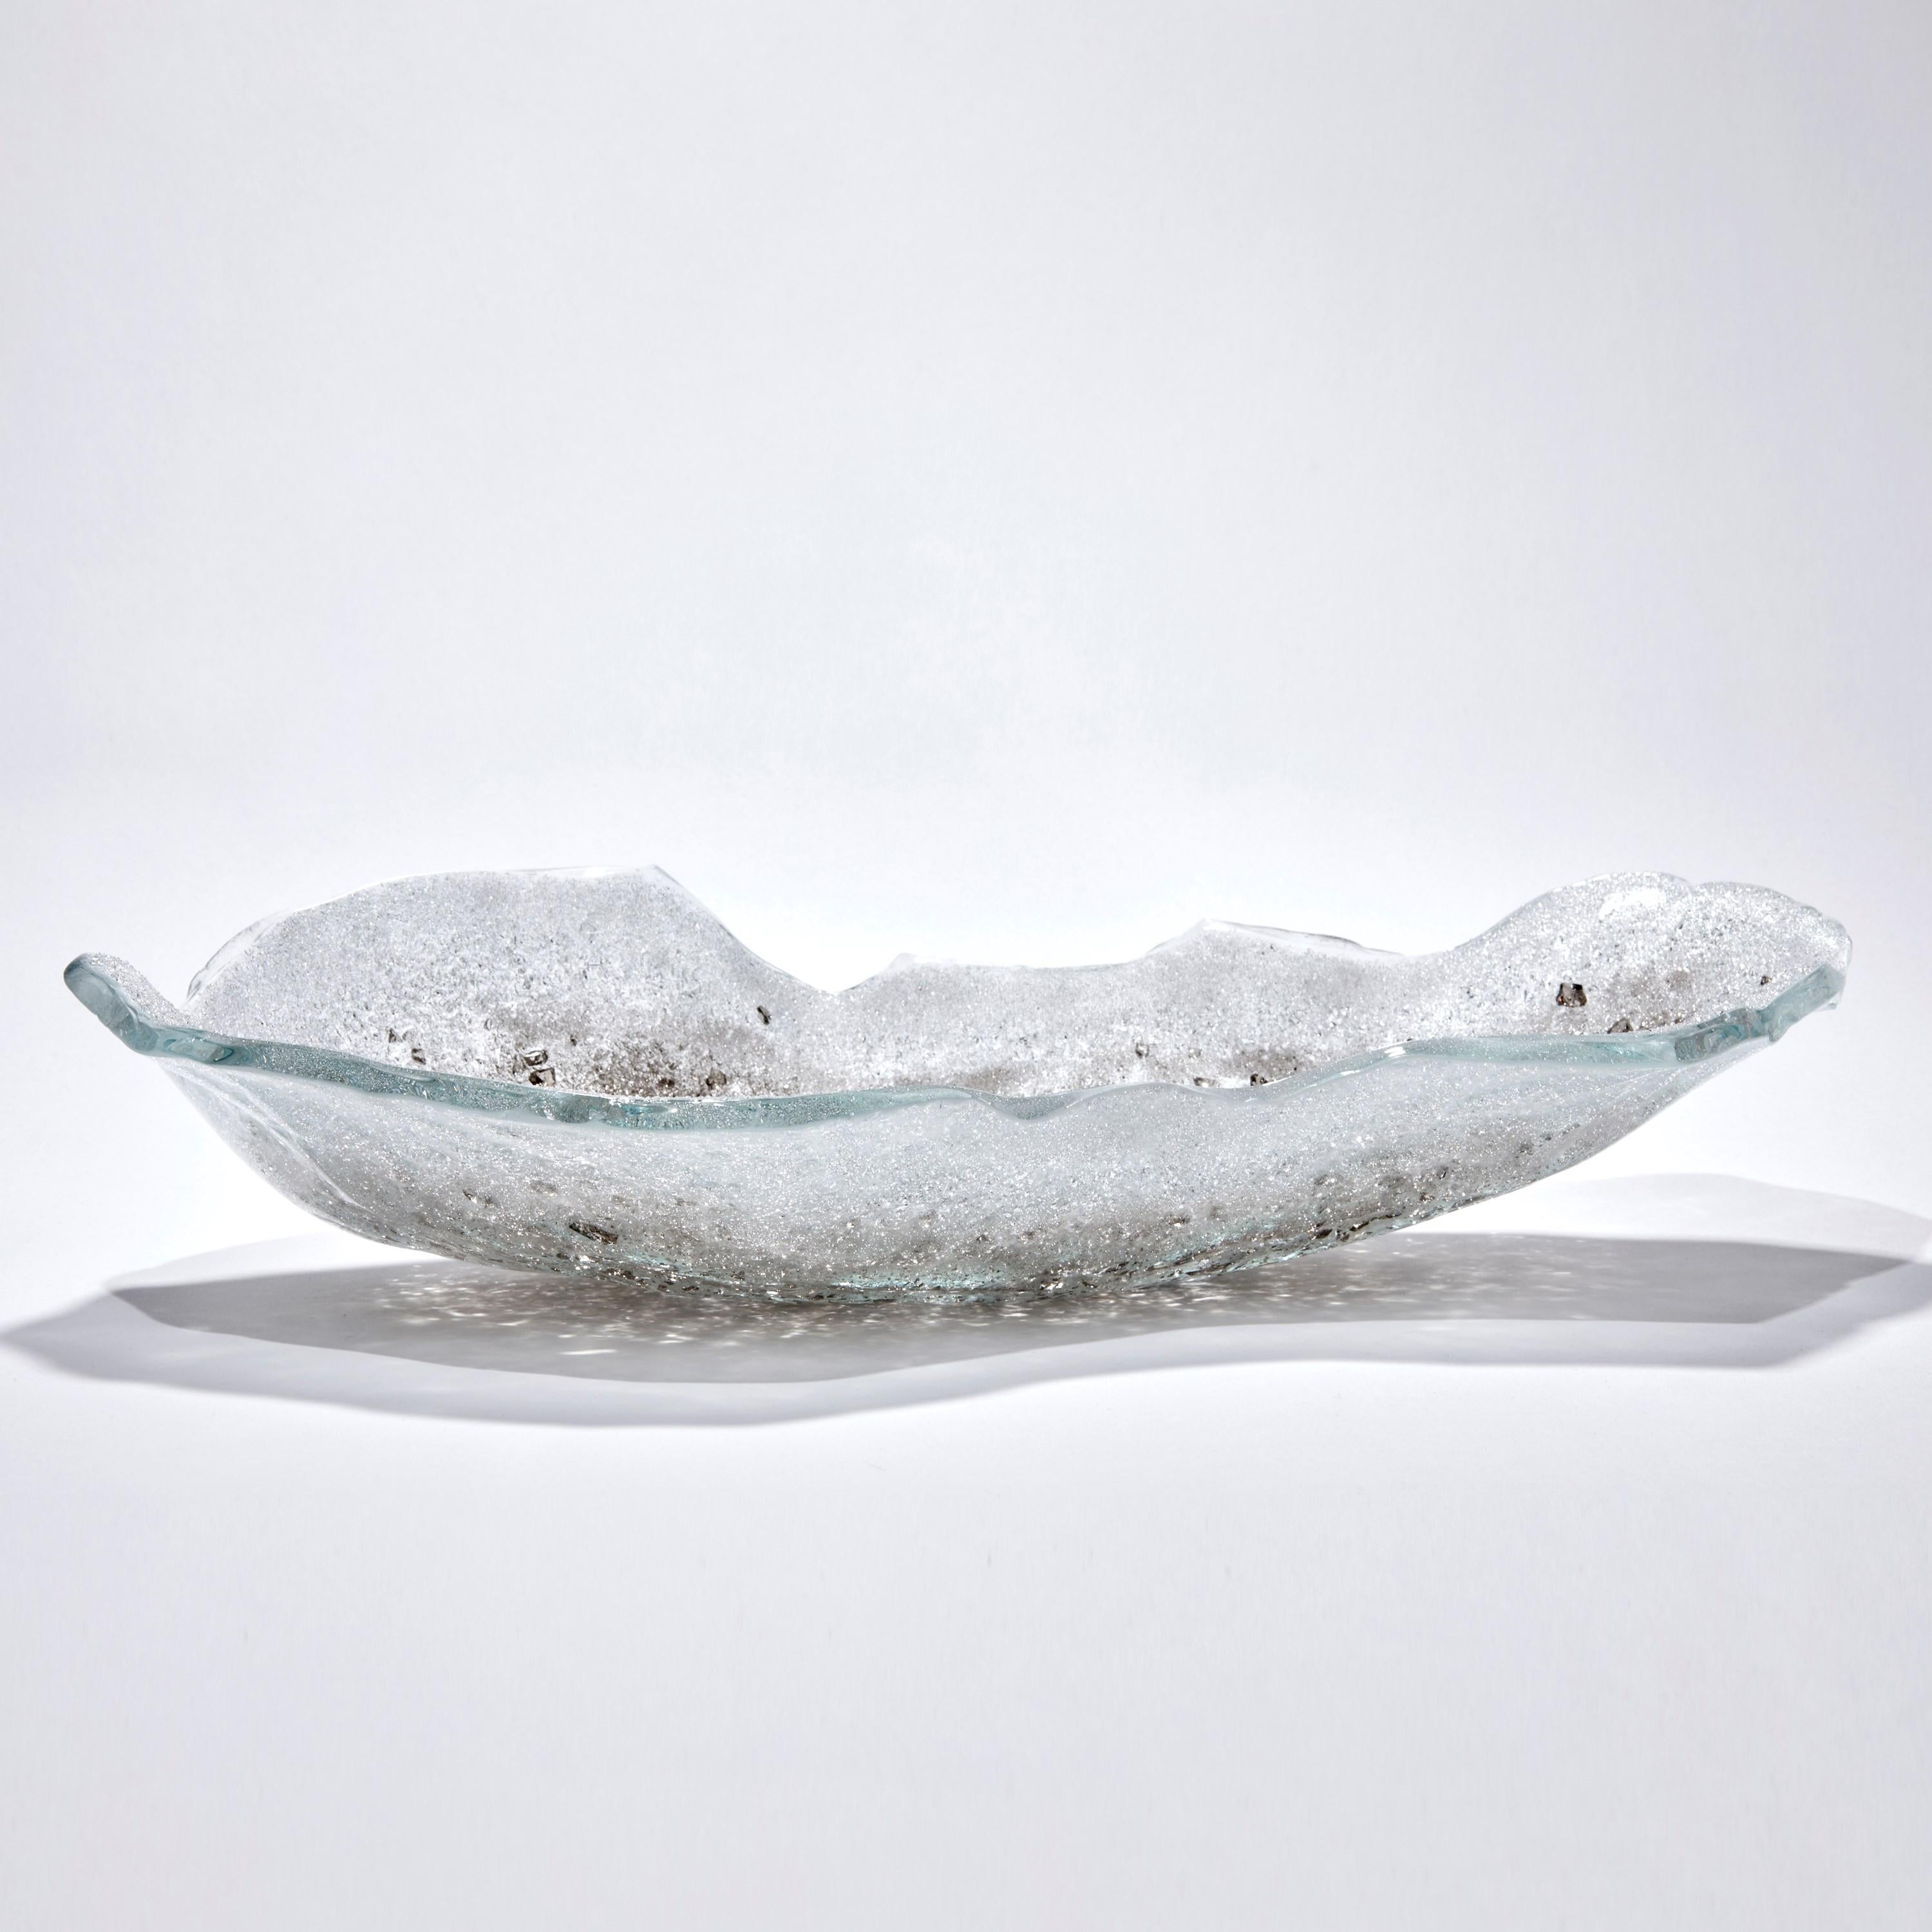 Organic Modern Celestine VI, a Bronze & Grey Sparkly Sculptural Centrepiece by Wayne Charmer For Sale